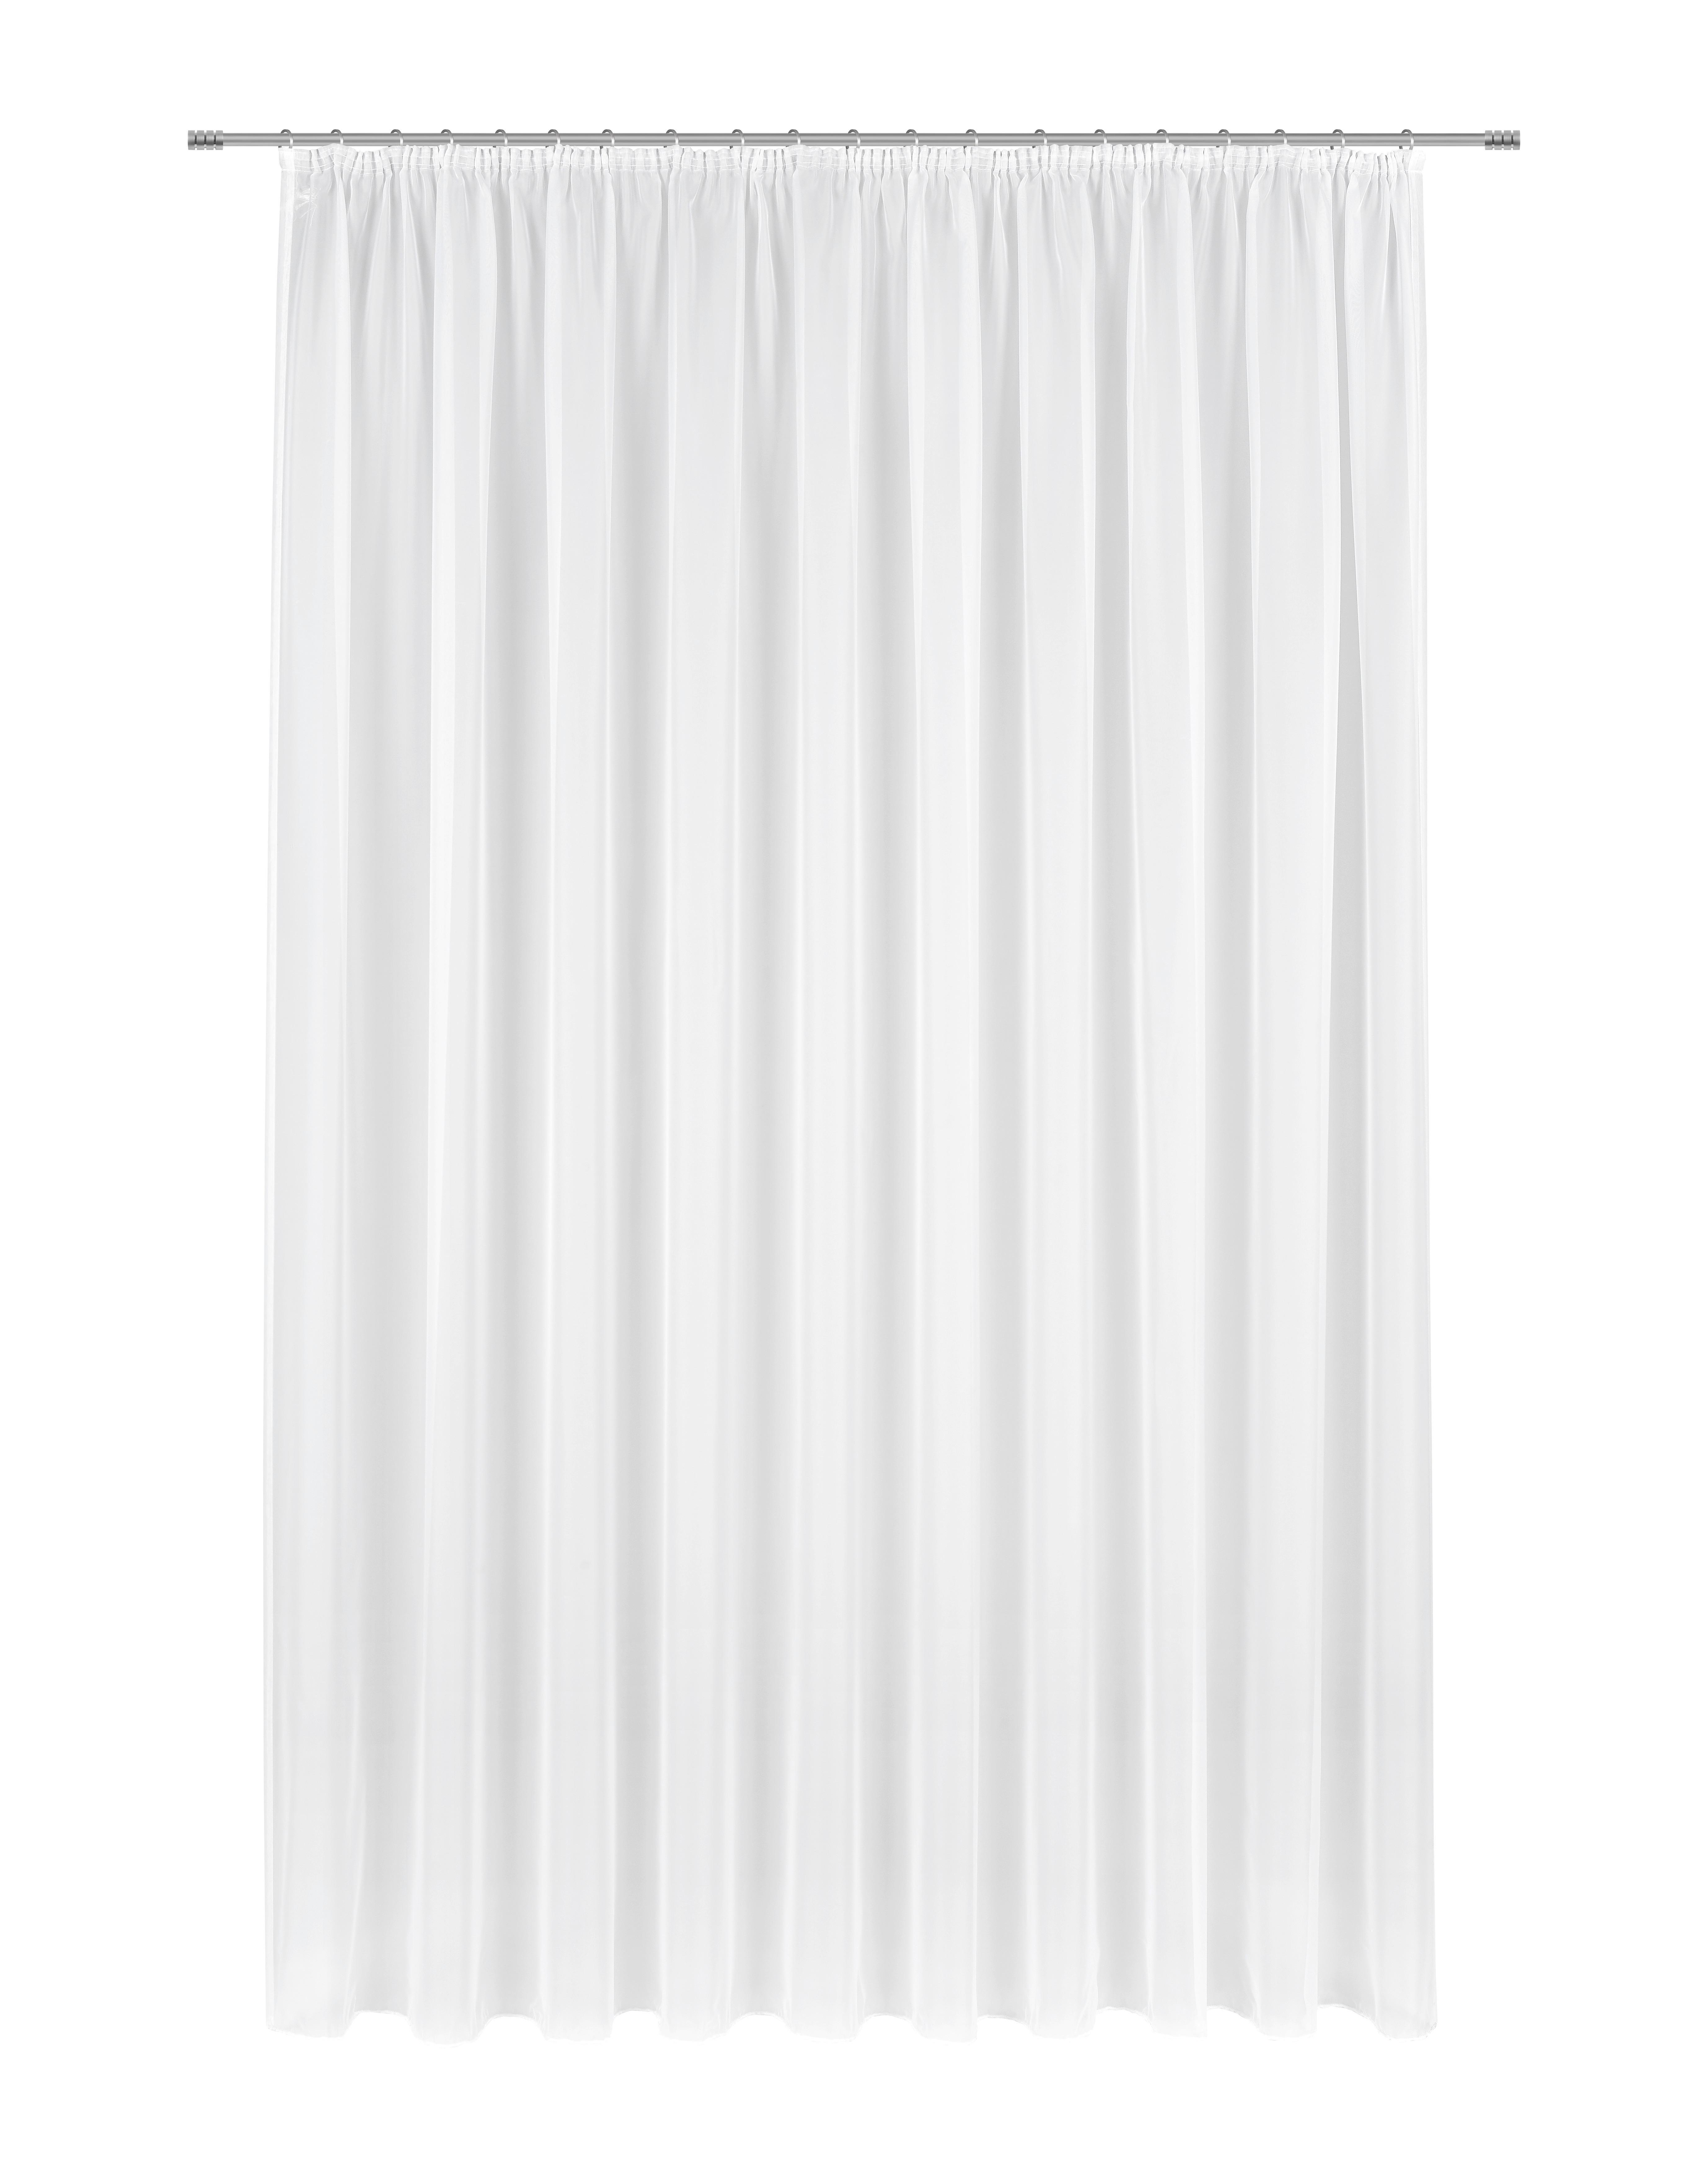 Fertigstore Anna Store 3 ca. 300x245cm - Weiß, KONVENTIONELL, Textil (300/245cm) - Modern Living